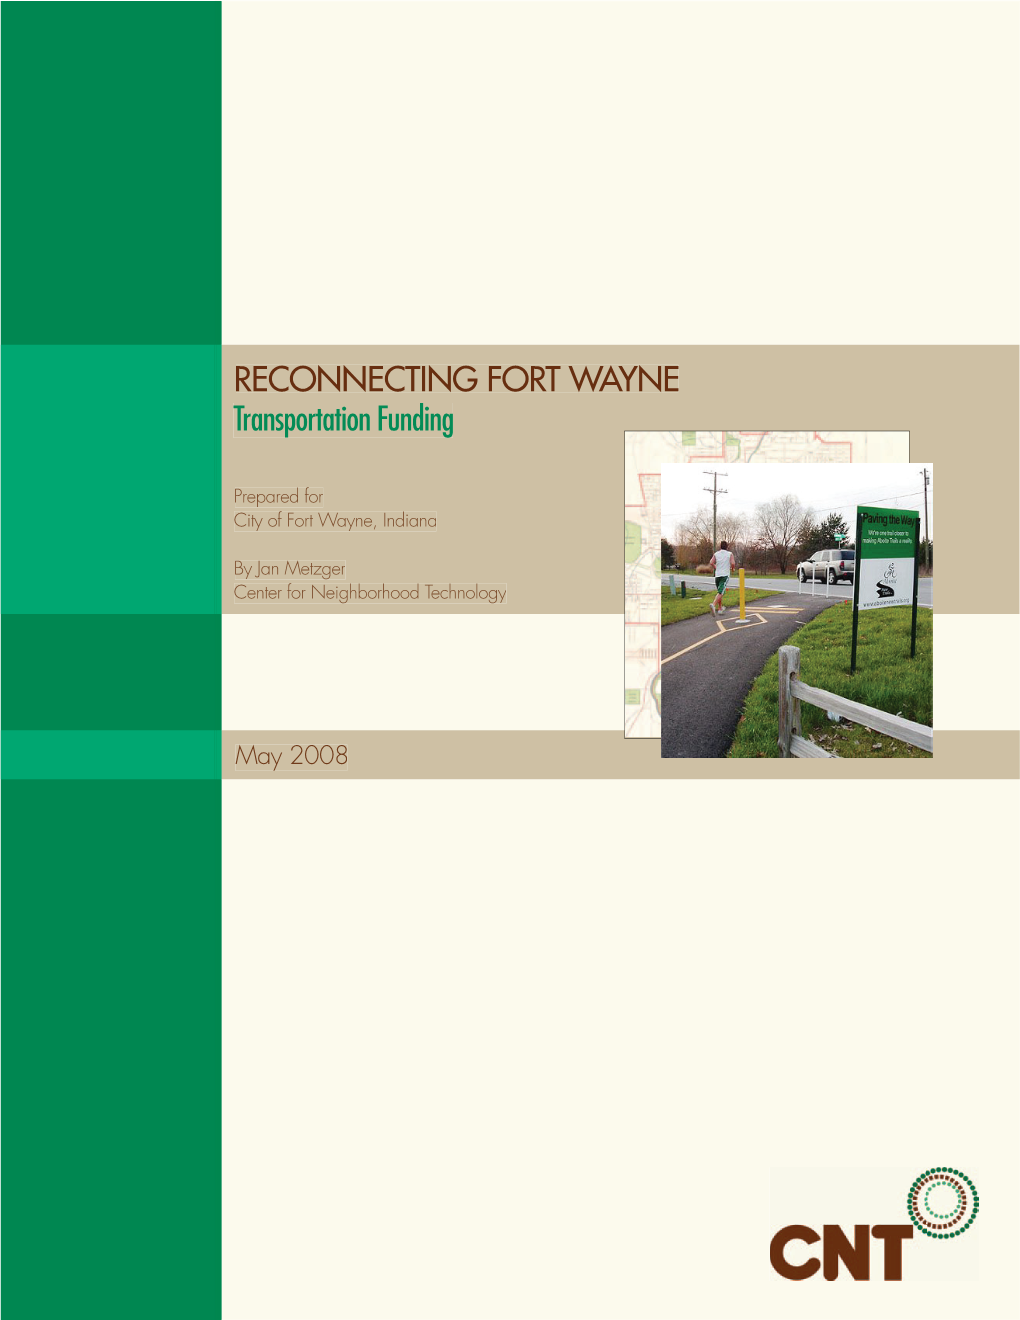 RECONNECTING FORT WAYNE Transportation Funding